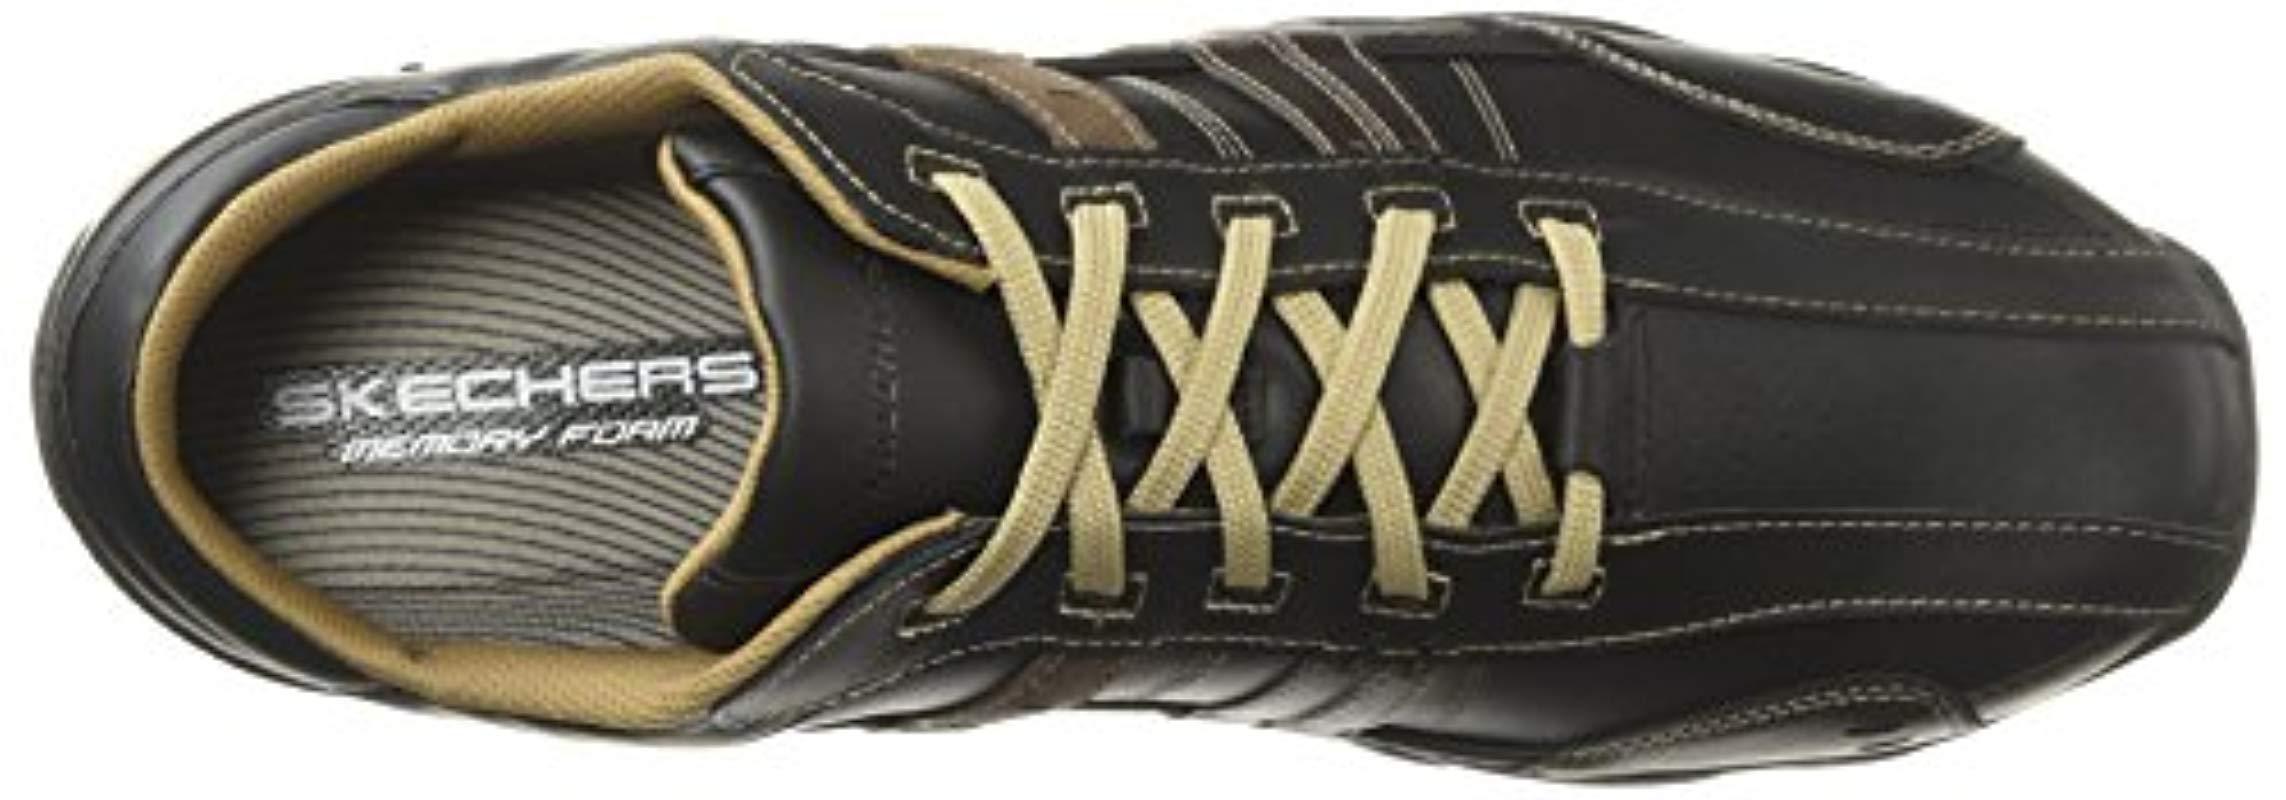 Skechers Leather Diameter Vassell Casual Sneaker in Black/Tan (Black) for  Men | Lyst